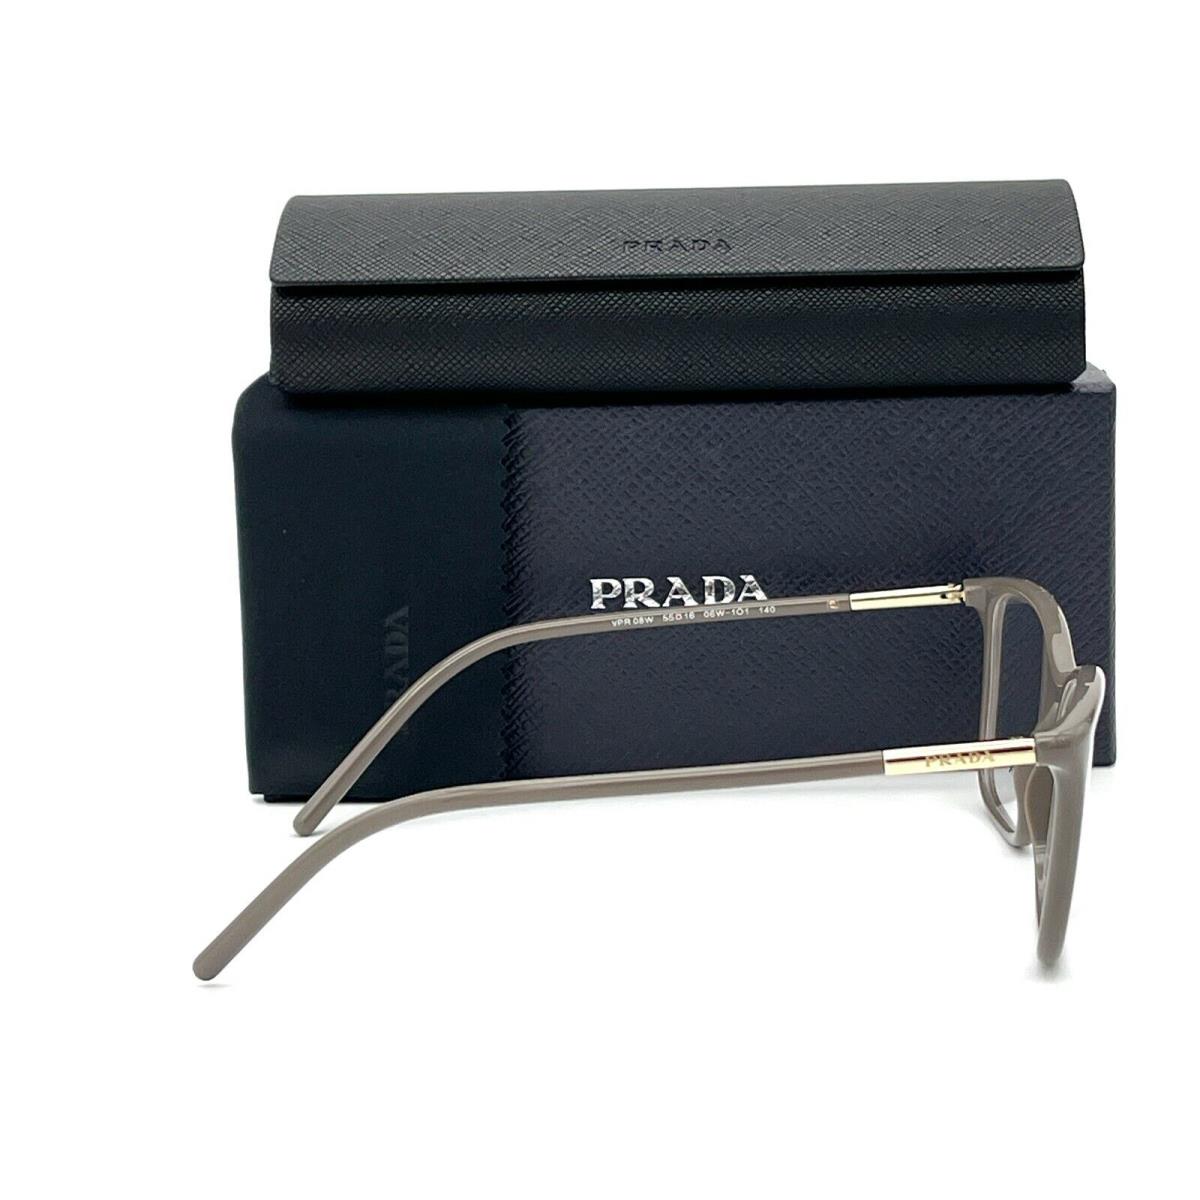 Prada eyeglasses  - Frame: 2